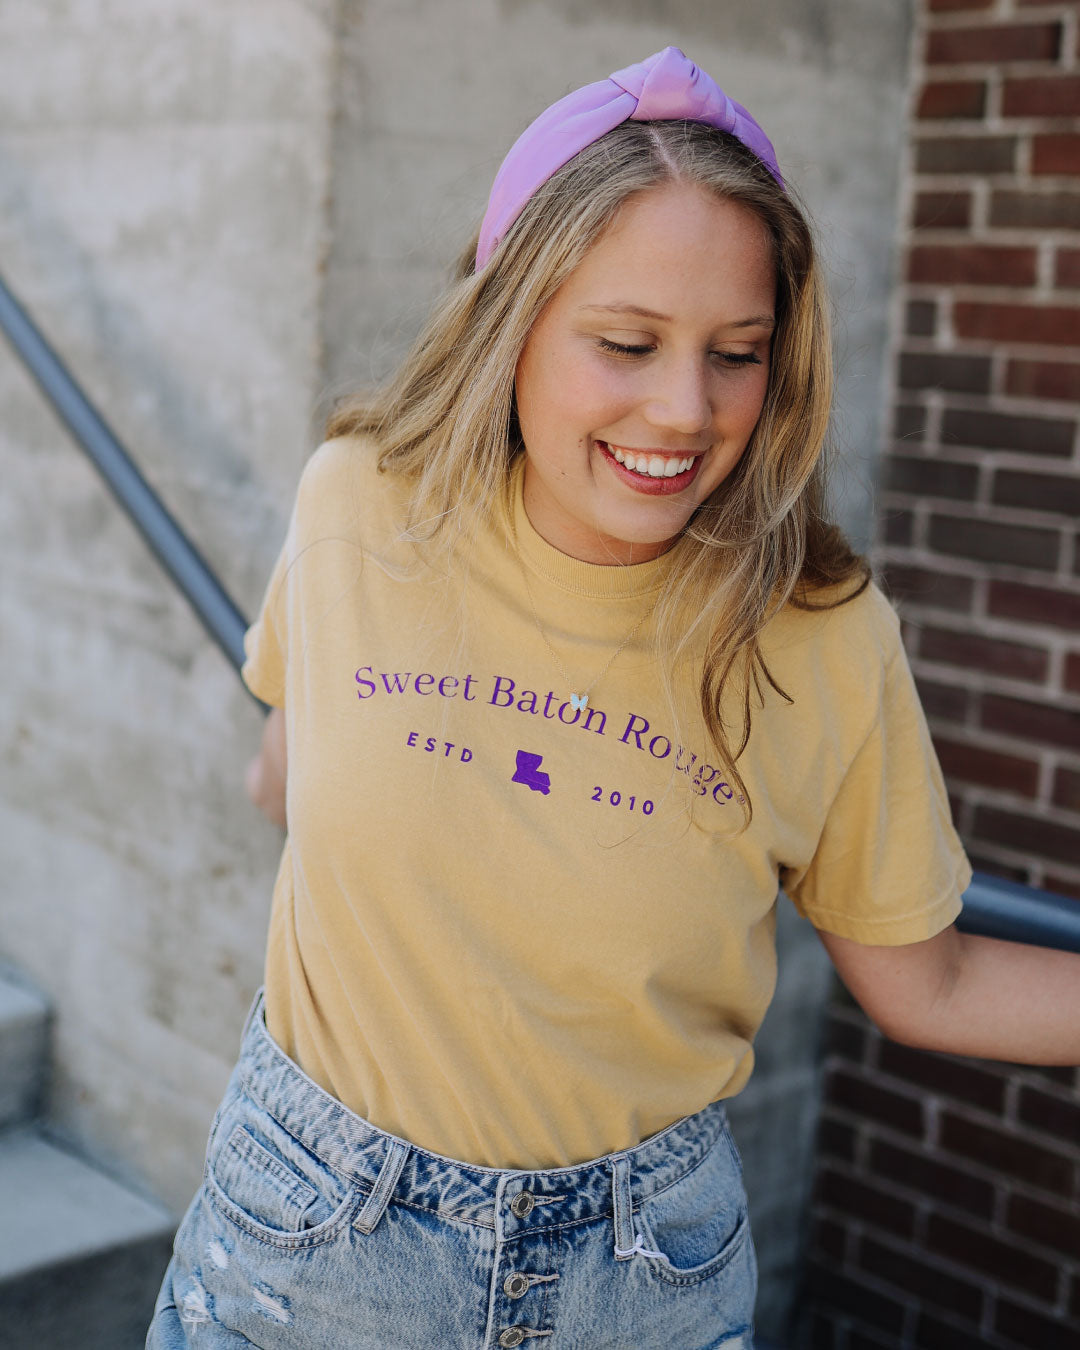 Sweet Baton Rouge® Travels T-Shirt